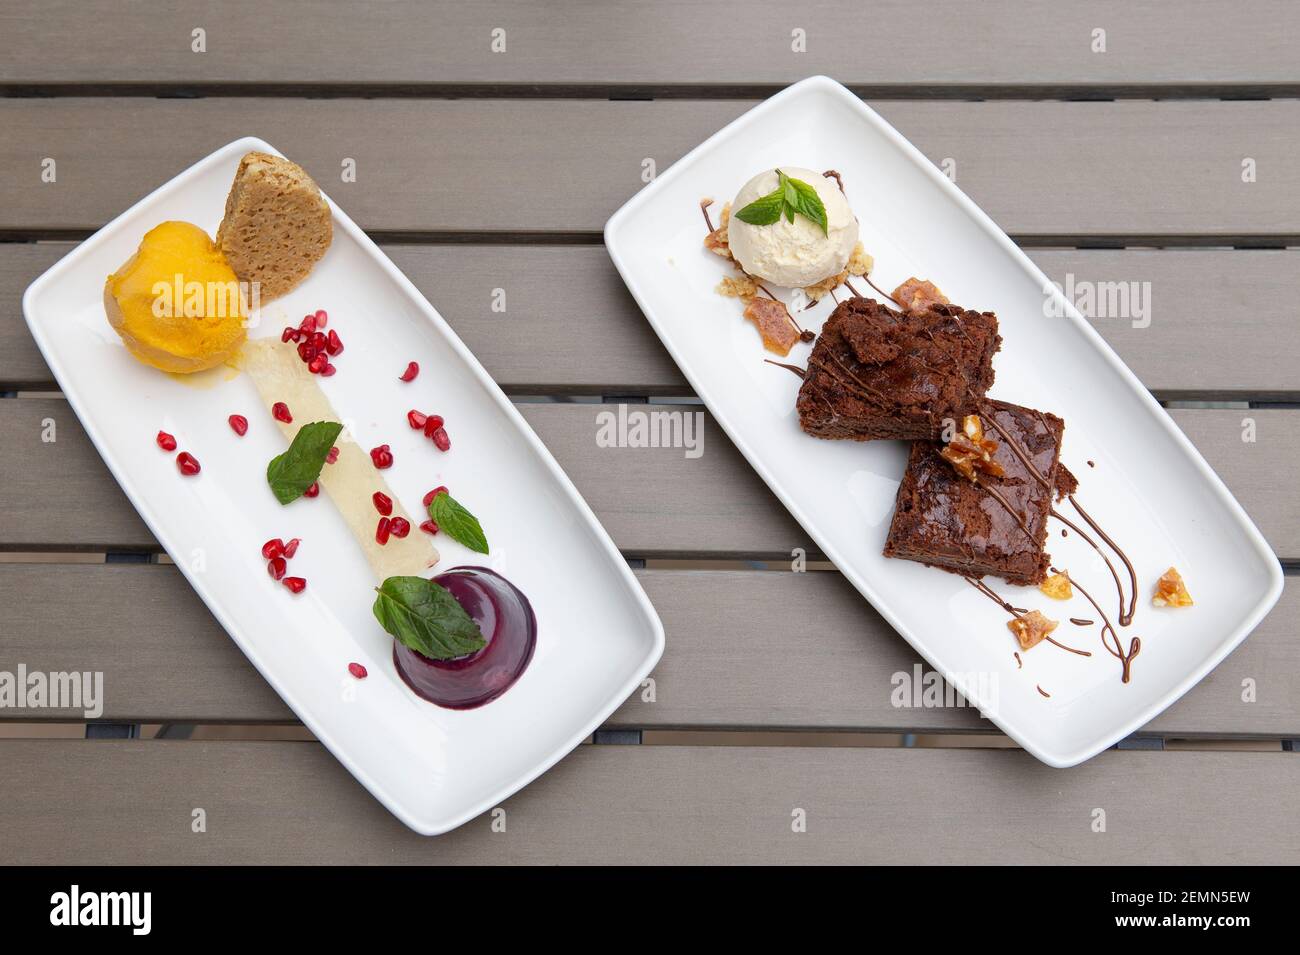 Desserts on white plates Stock Photo